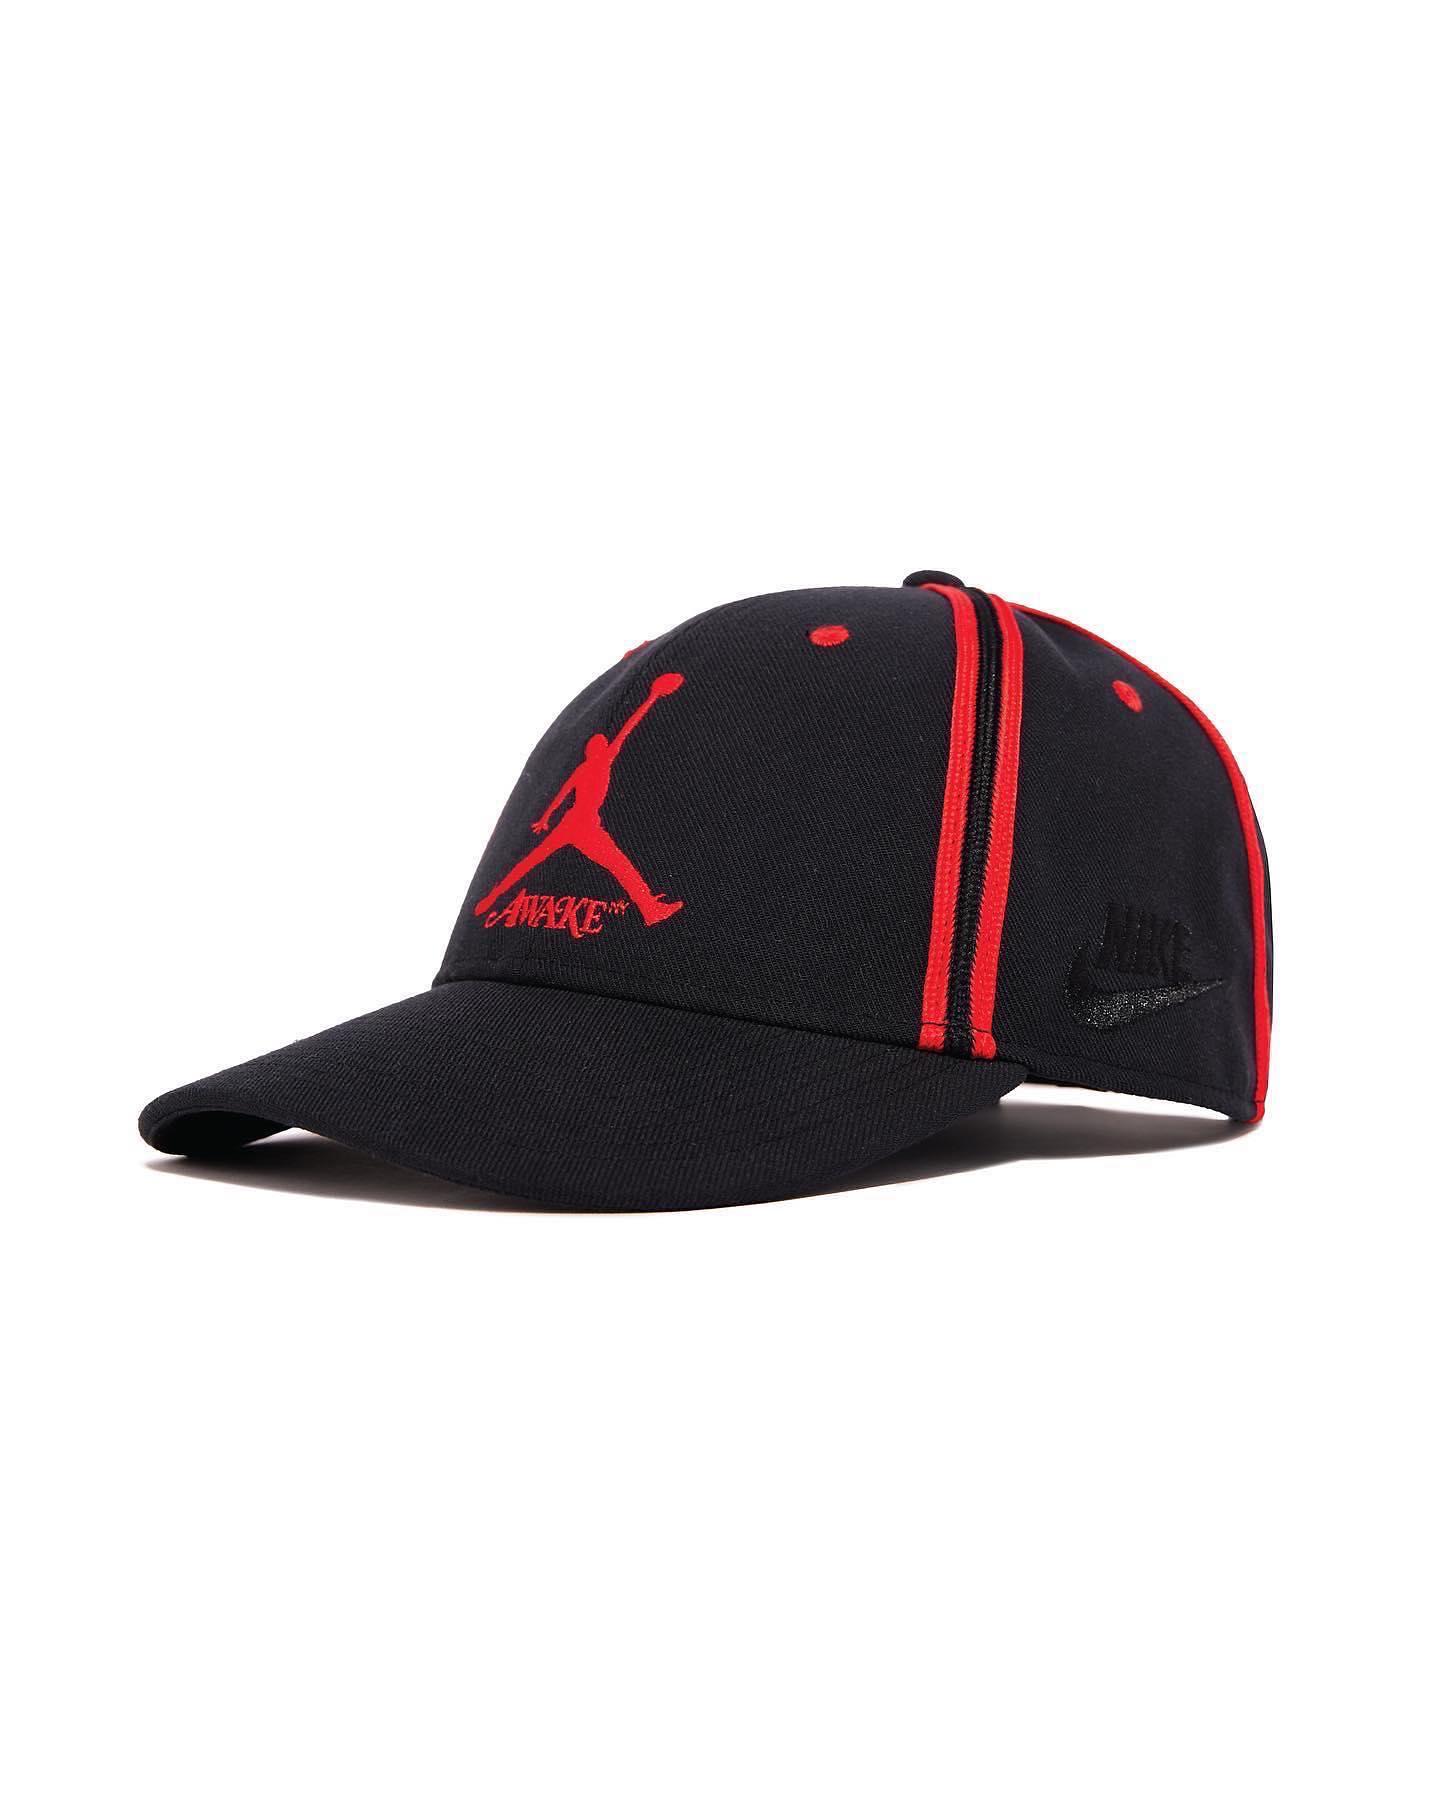 Awake NY x Jordan Brand cap